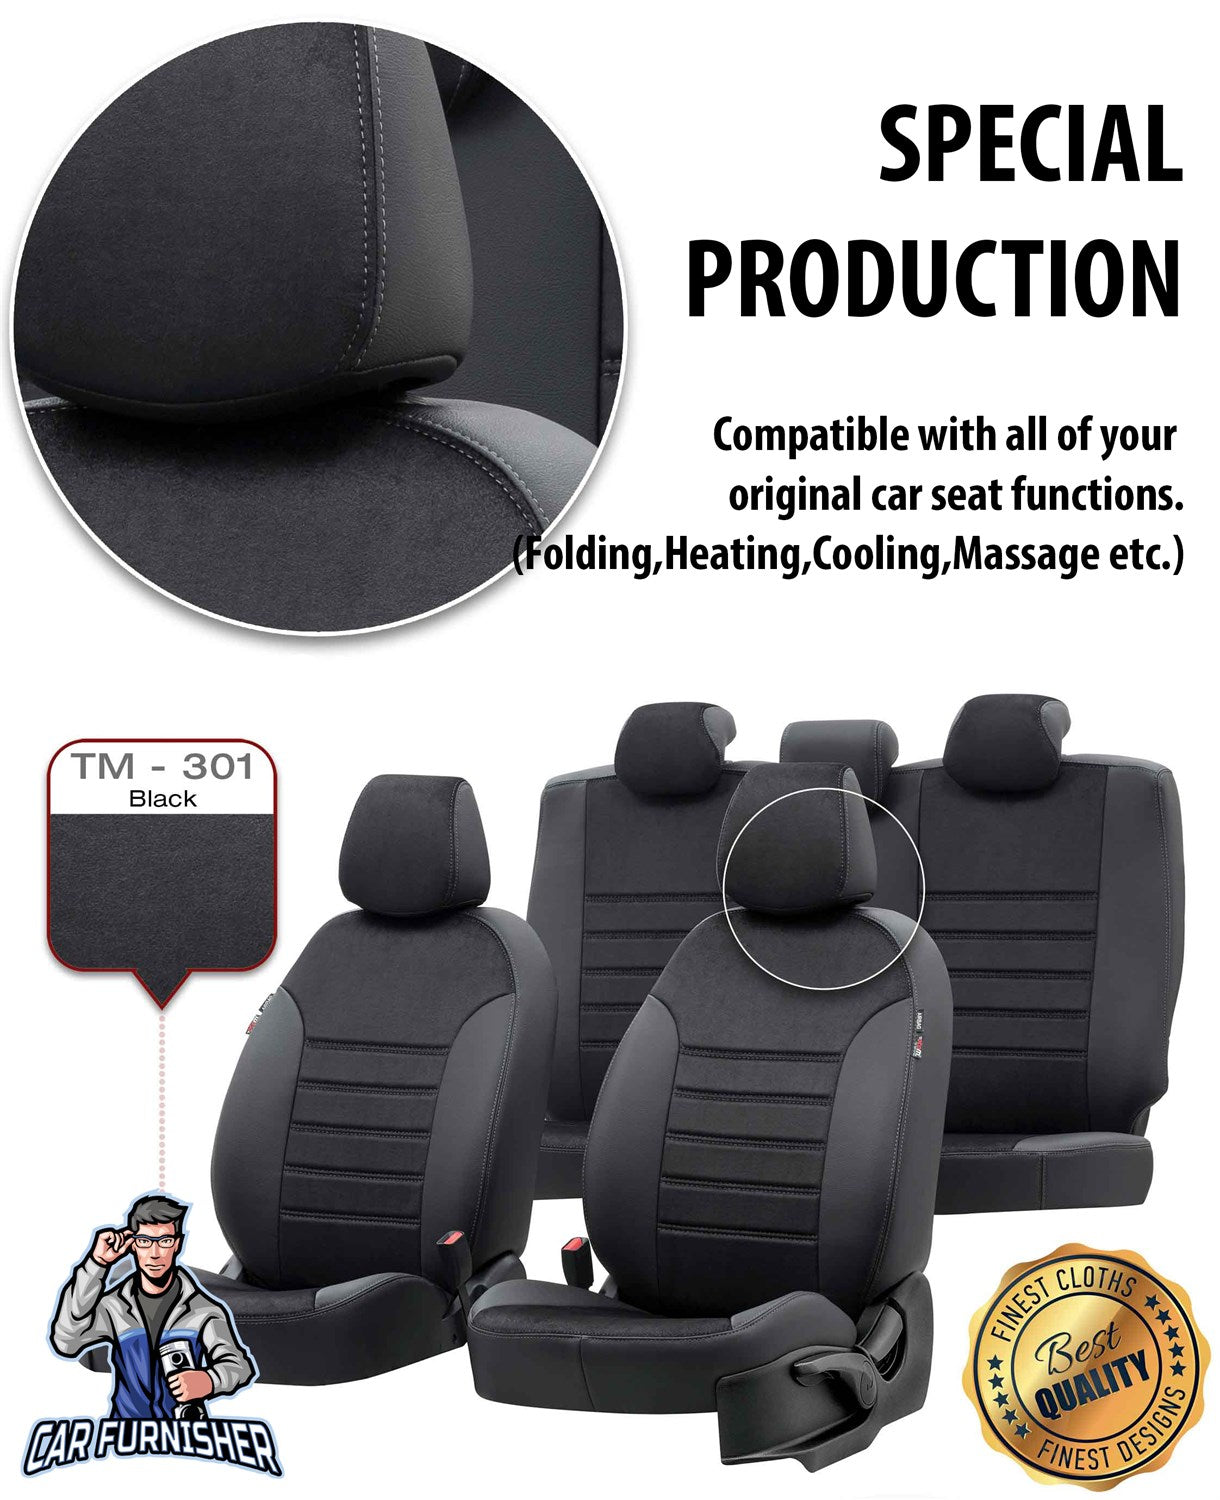 Fiat Albea Car Seat Covers 2002-2012 Milano Design Black Full Set (5 Seats + Handrest) Leather & Fabric